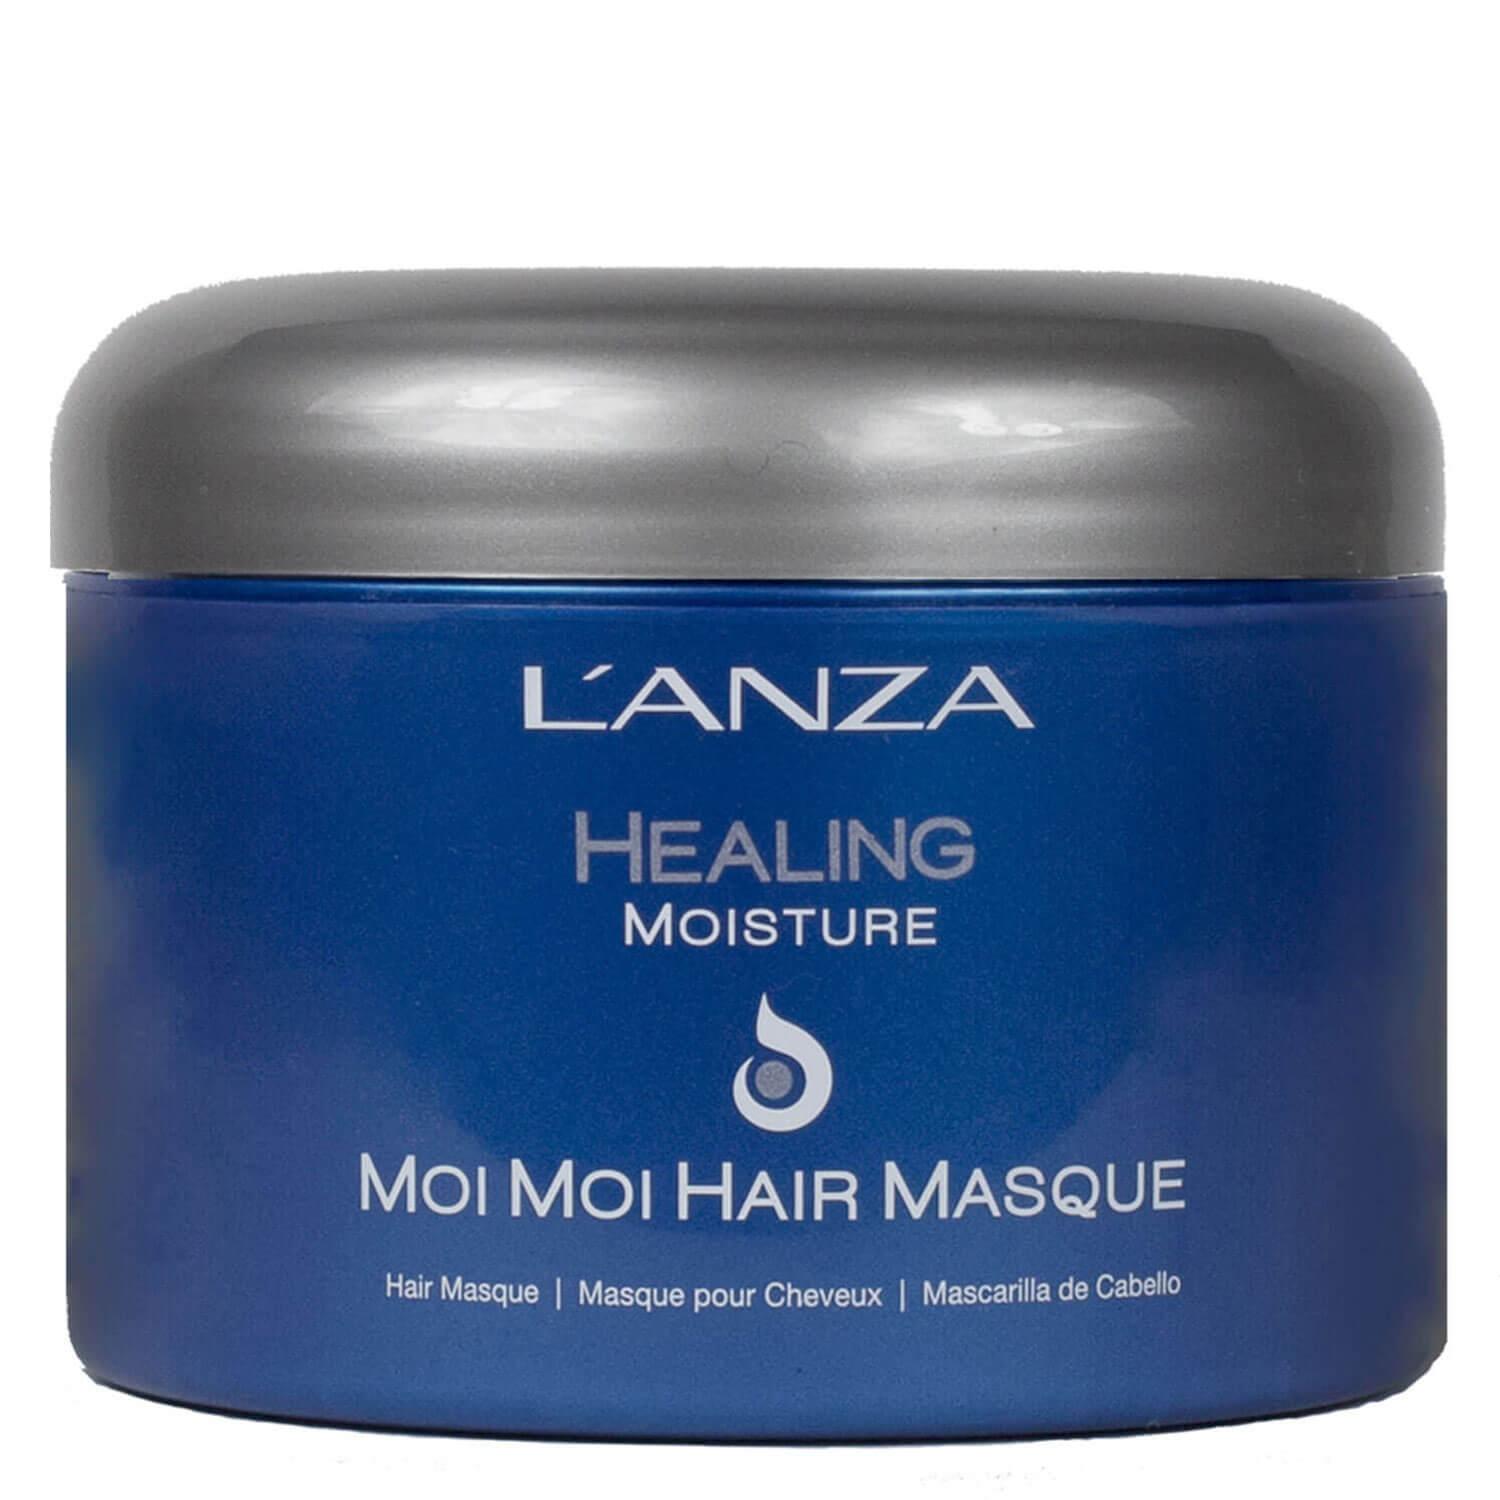 Healing Moisture - Moi Moi Hair Masque